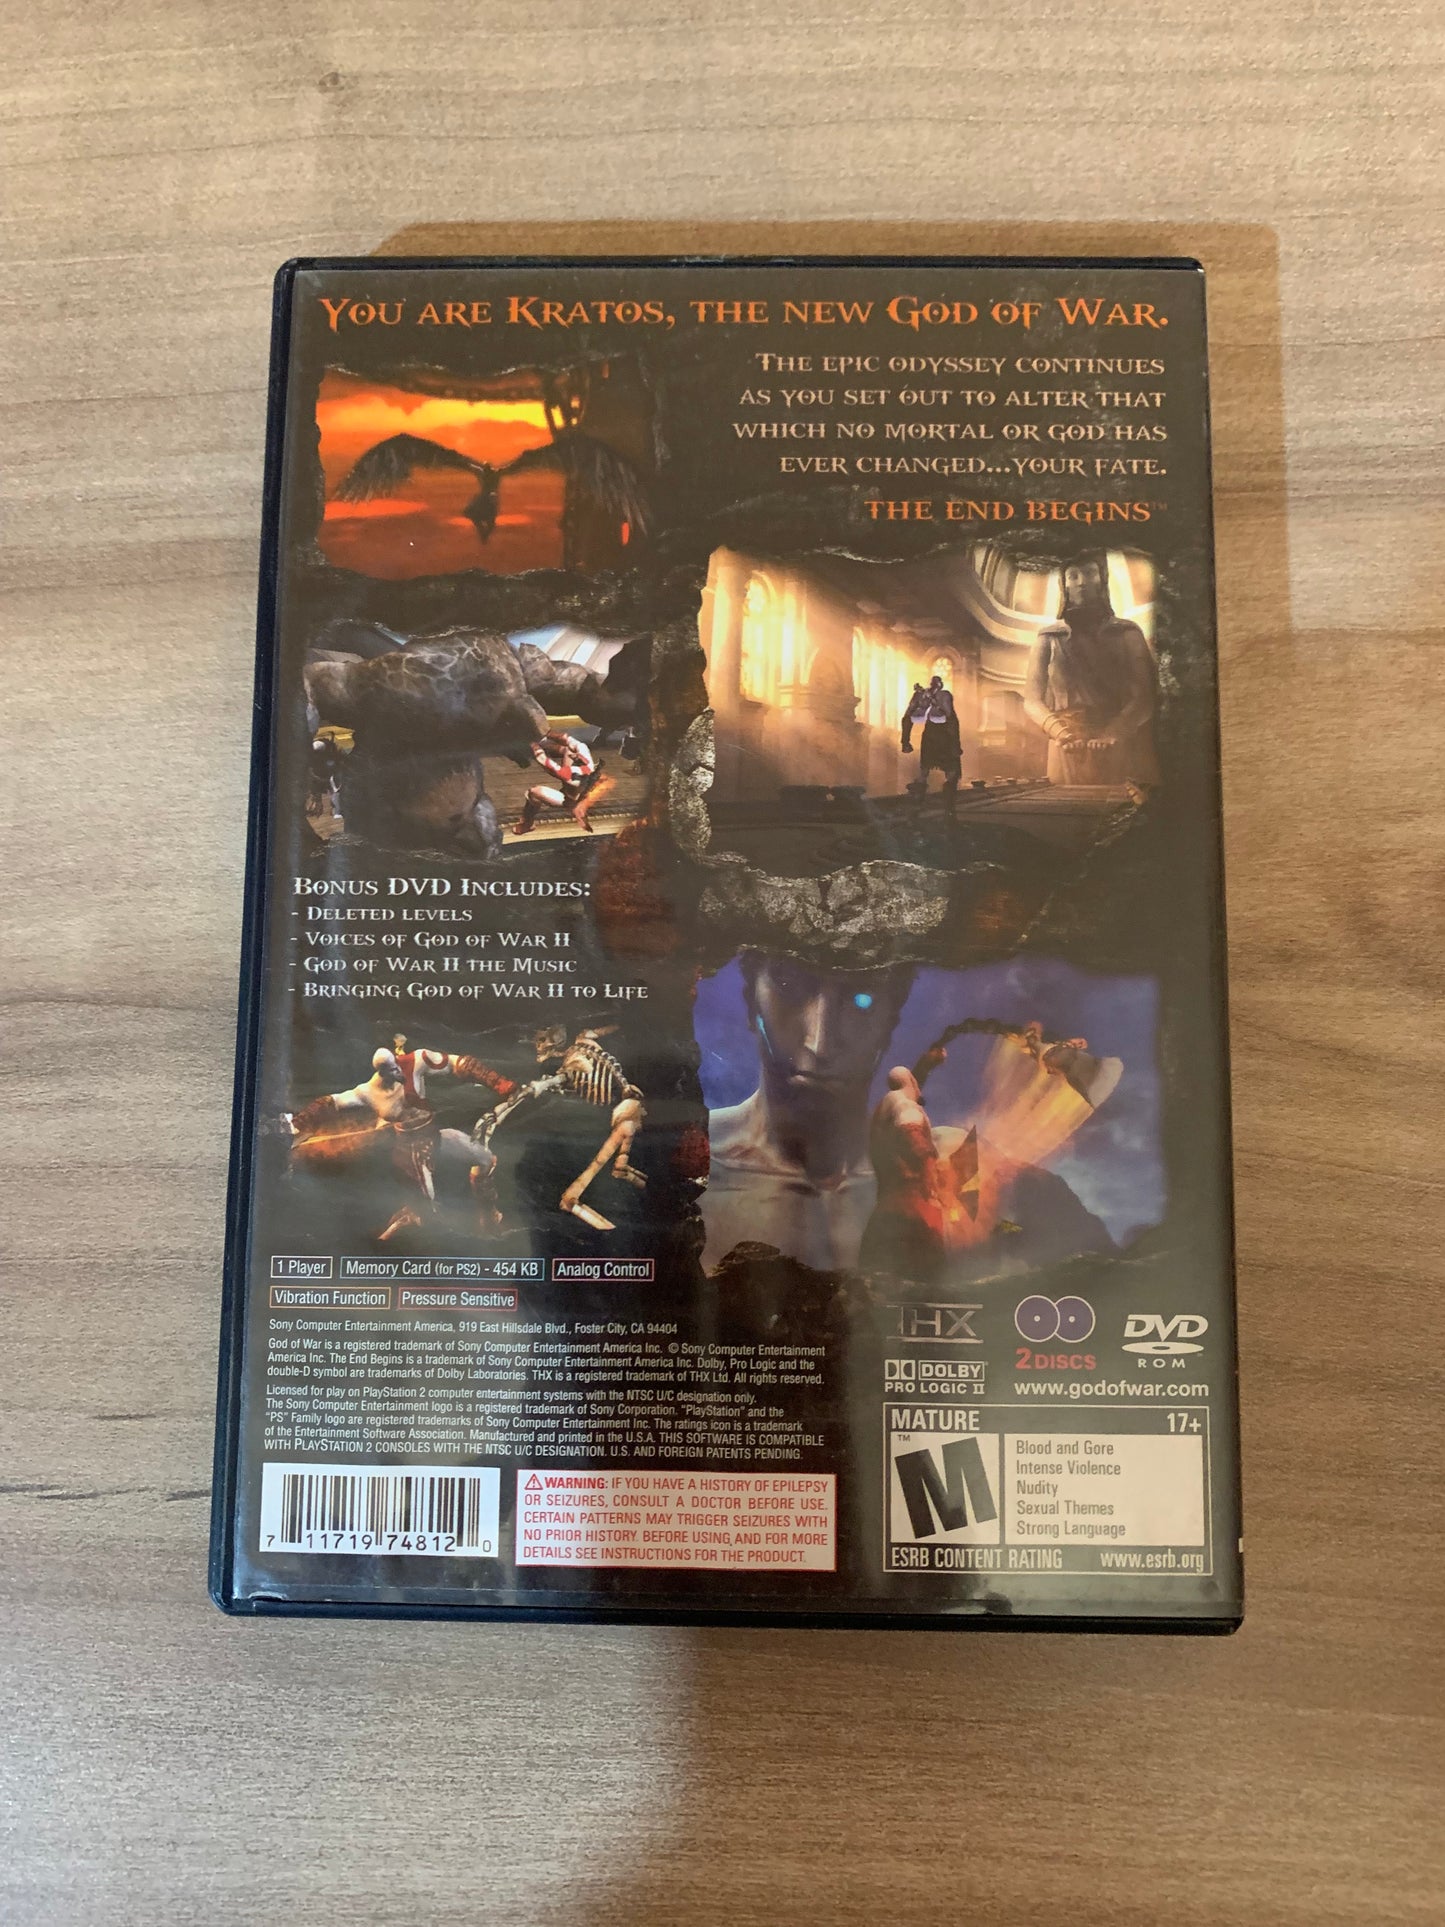 SONY PLAYSTATiON 2 [PS2] | GOD OF WAR II